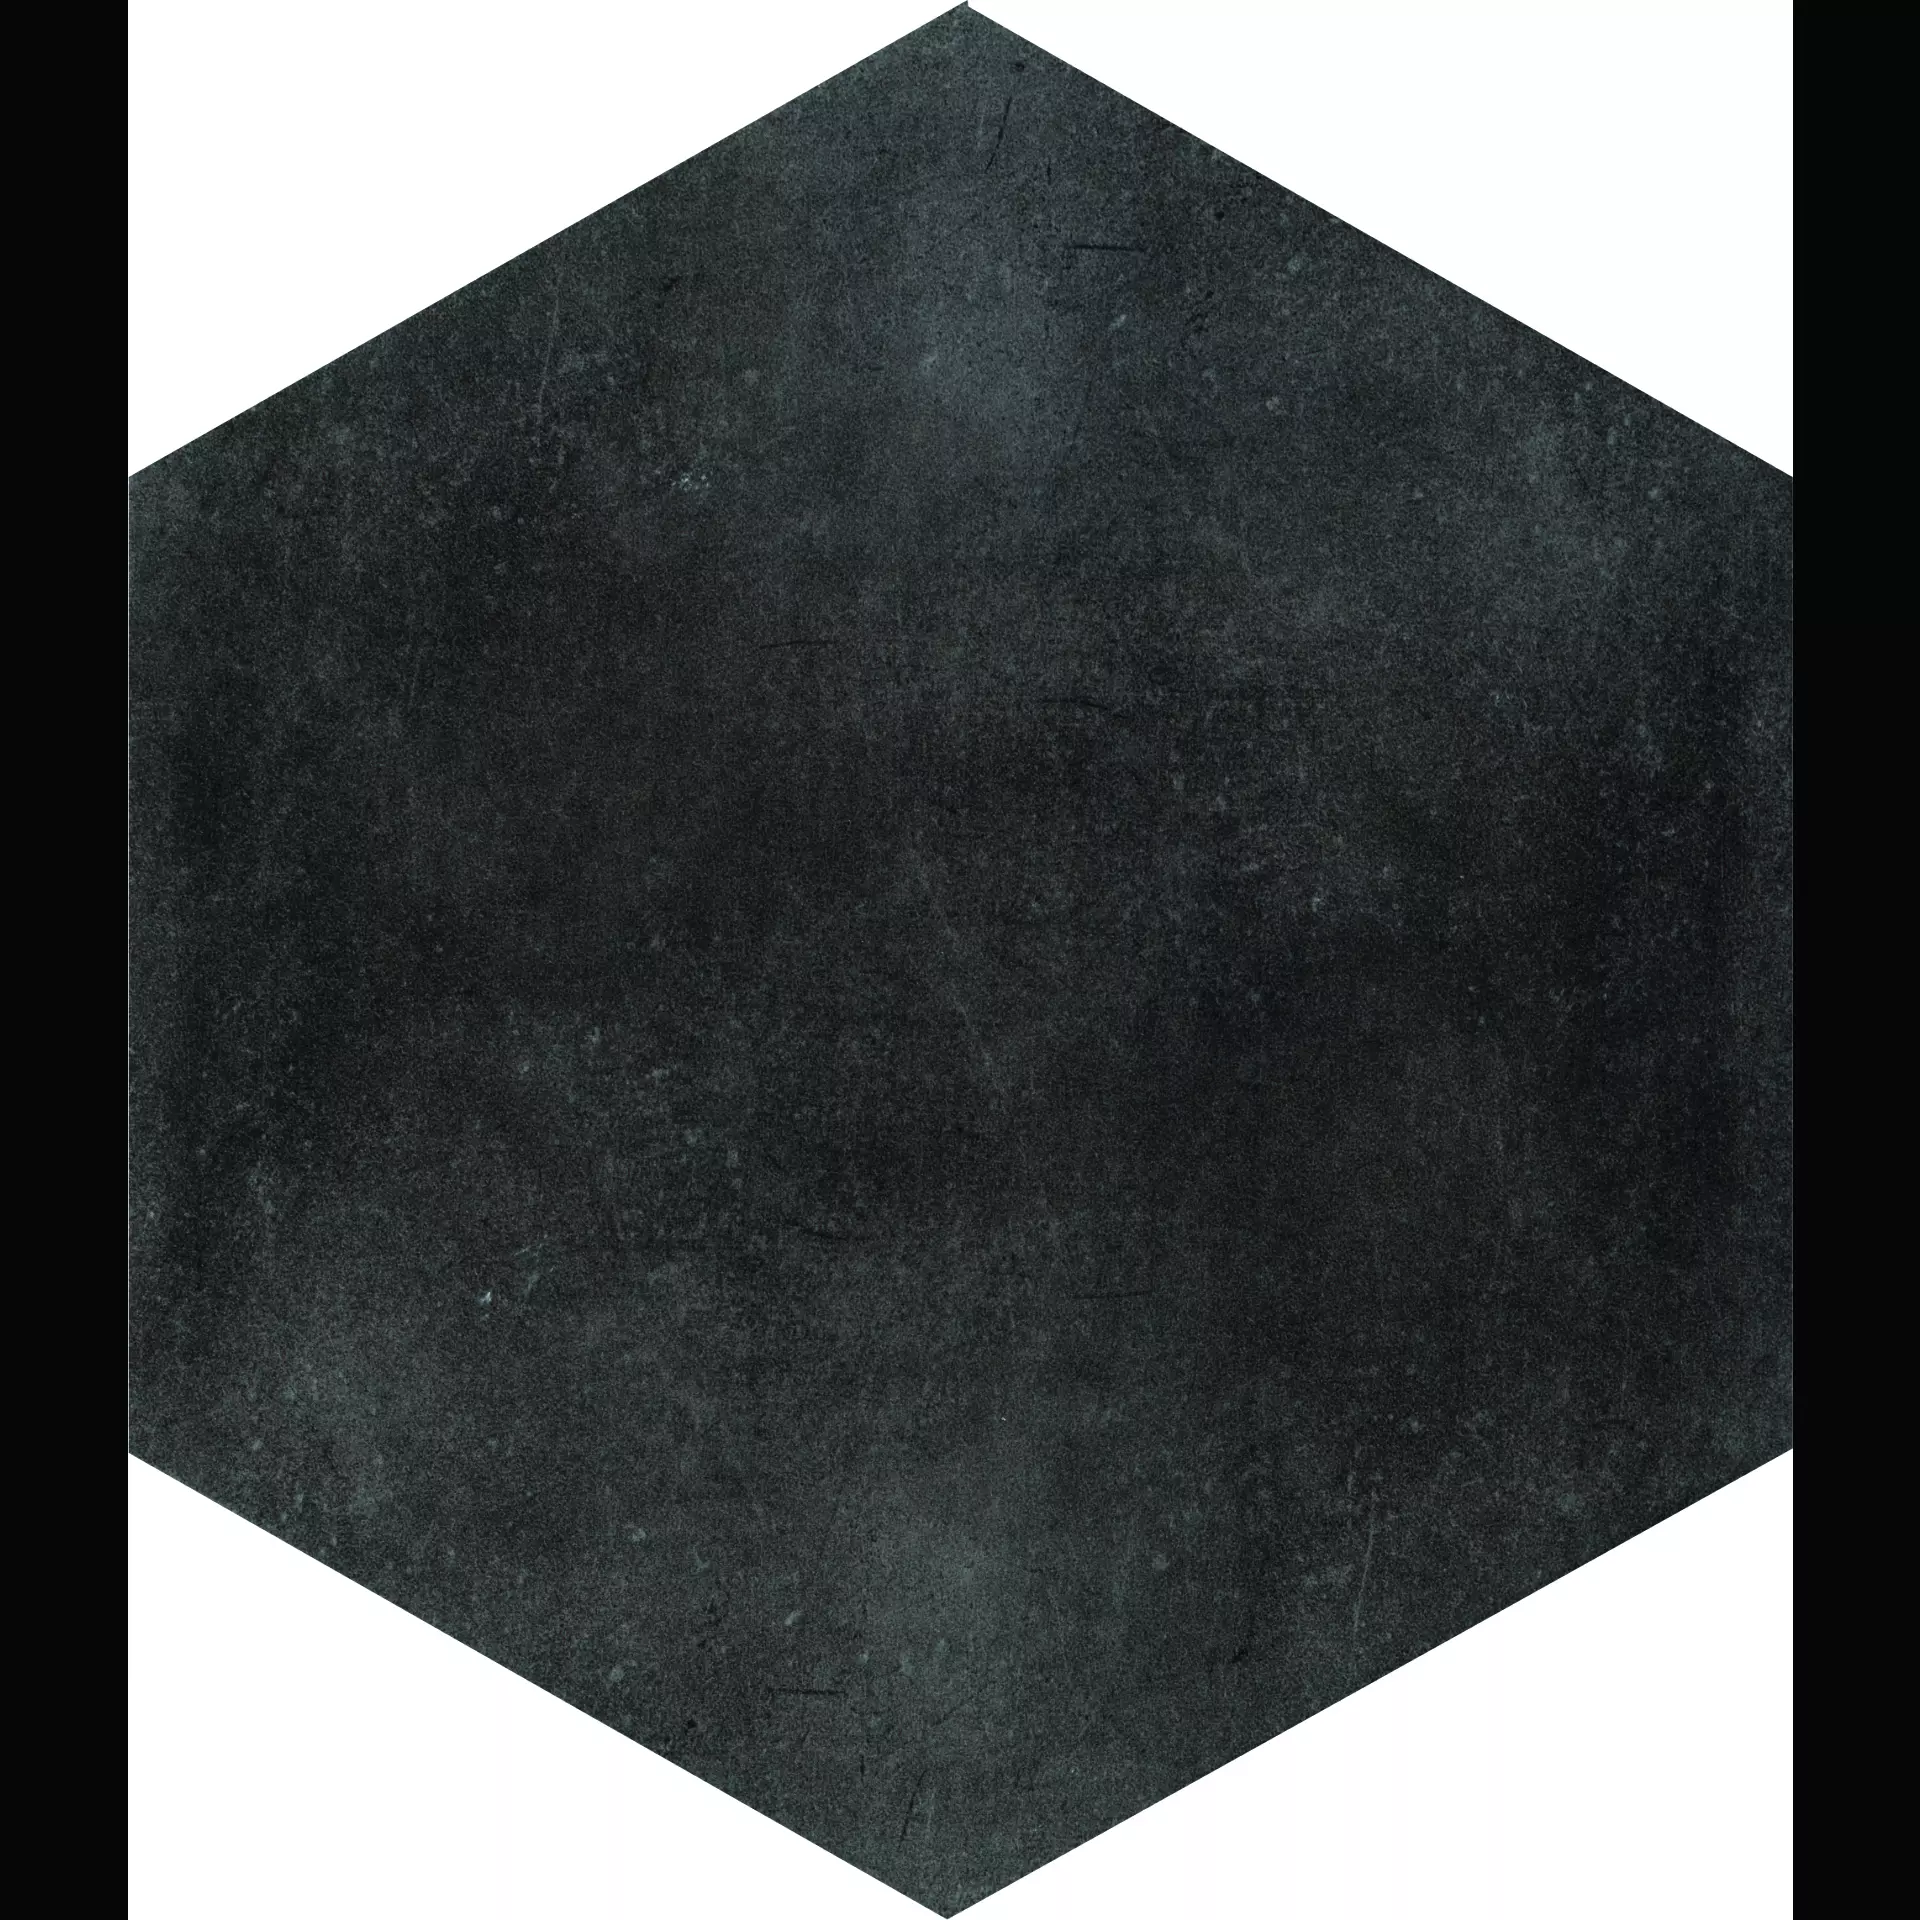 CIR Materia Prima Black Storm Naturale Hexagon 1069777 24x27,7cm 10mm